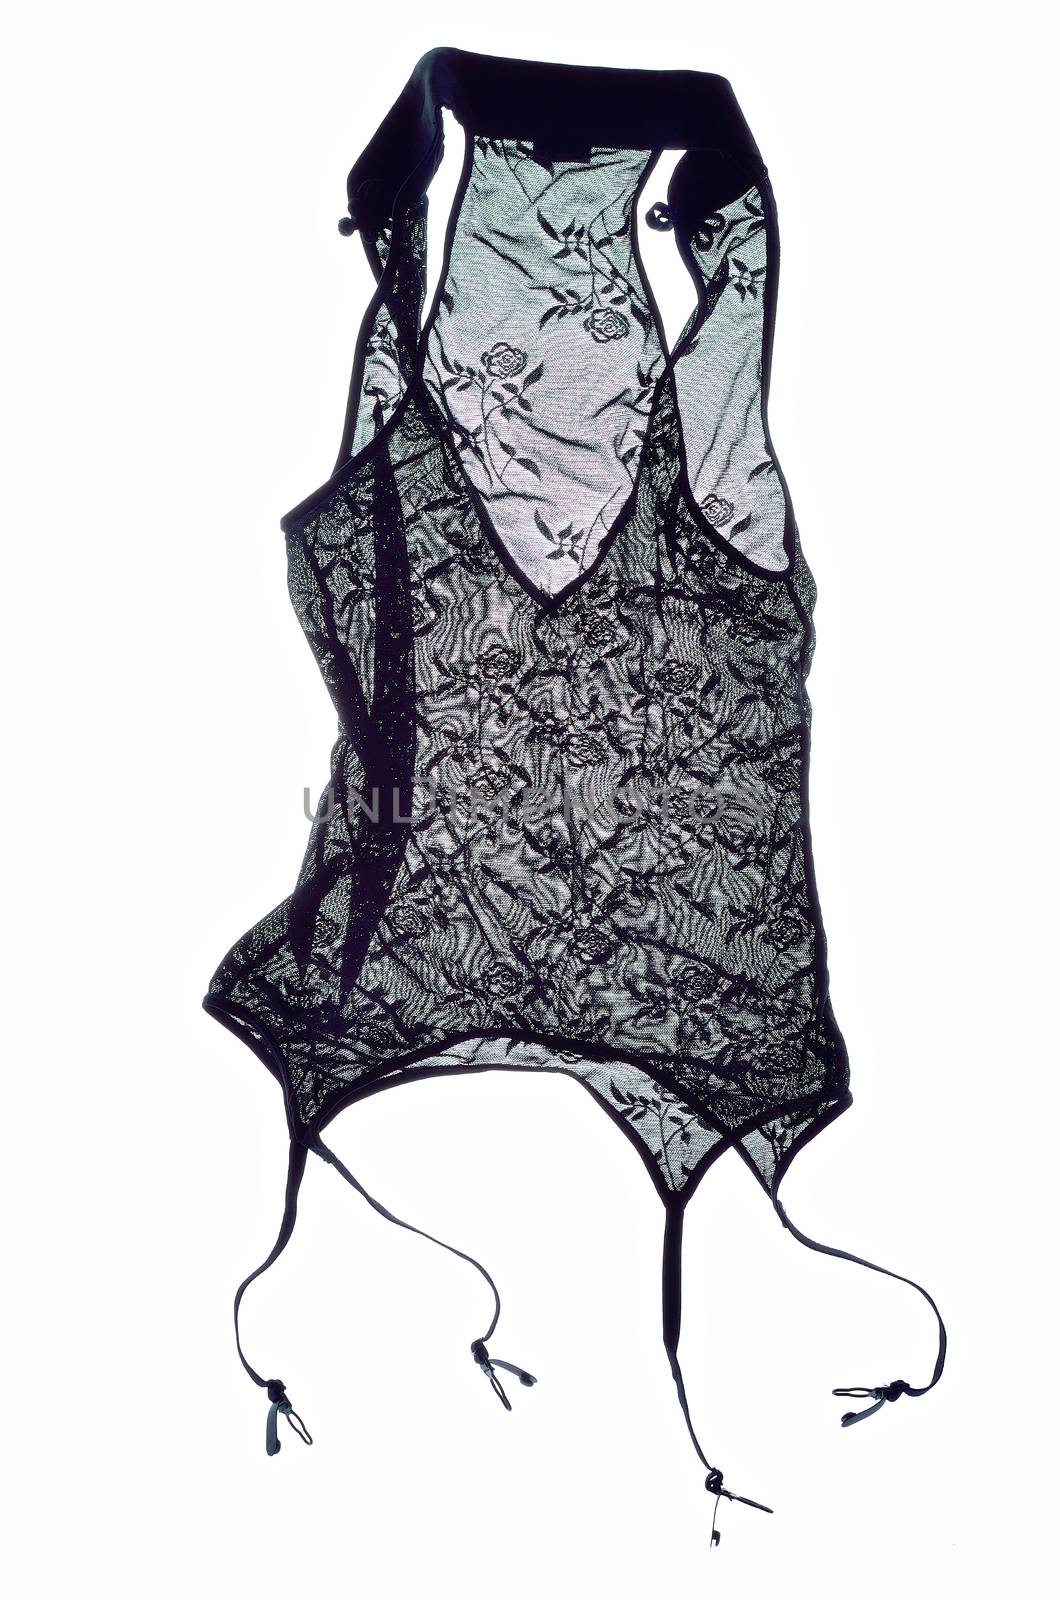 Sexy undergarment by styf22